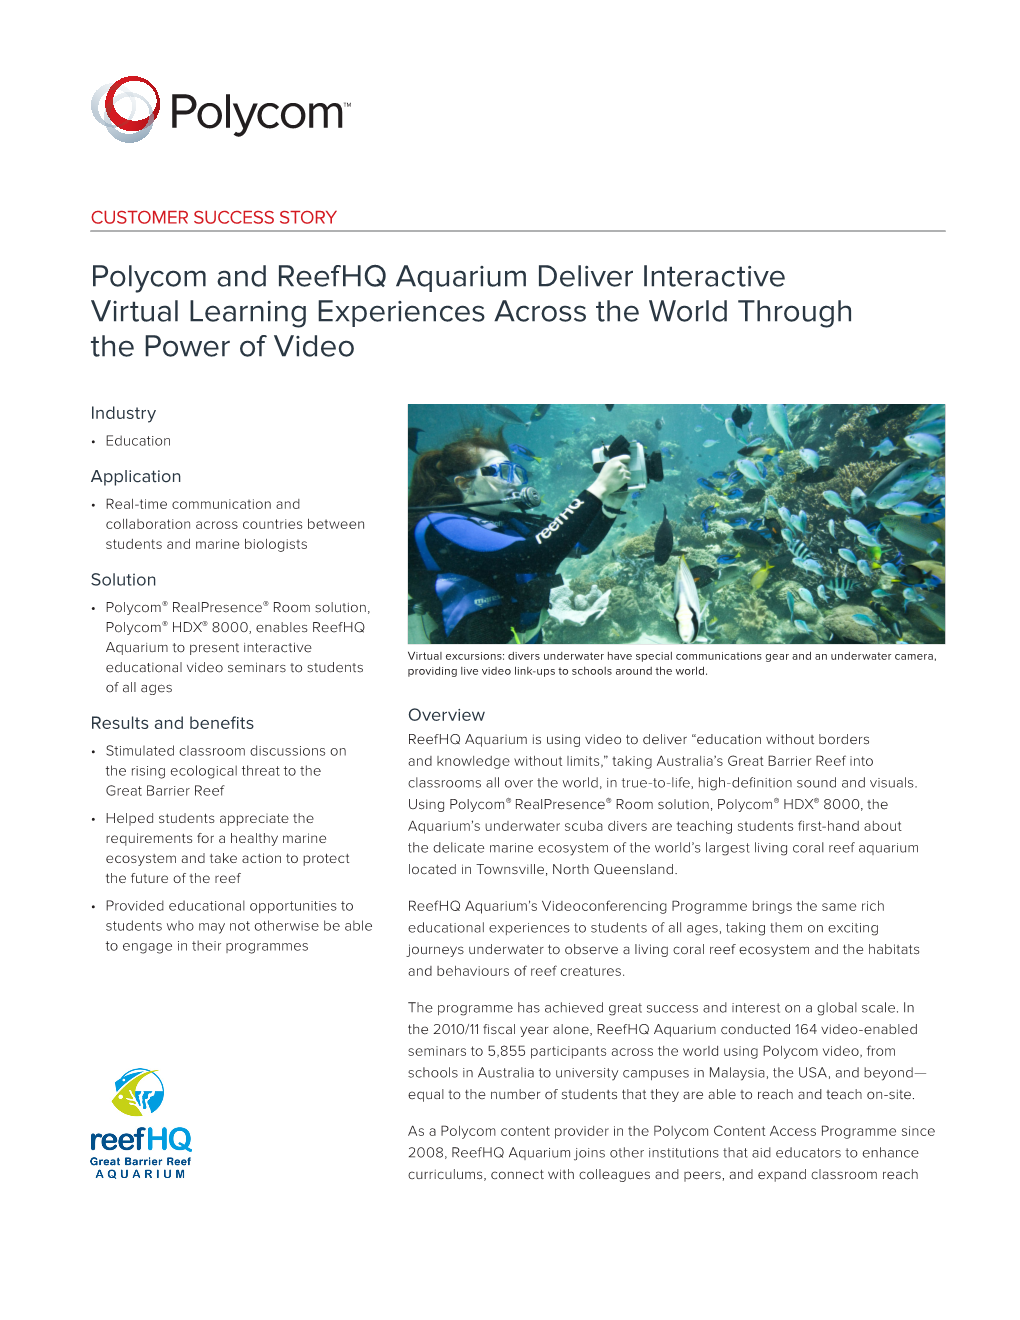 Polycom and Reef HQ Aquarium Success Story